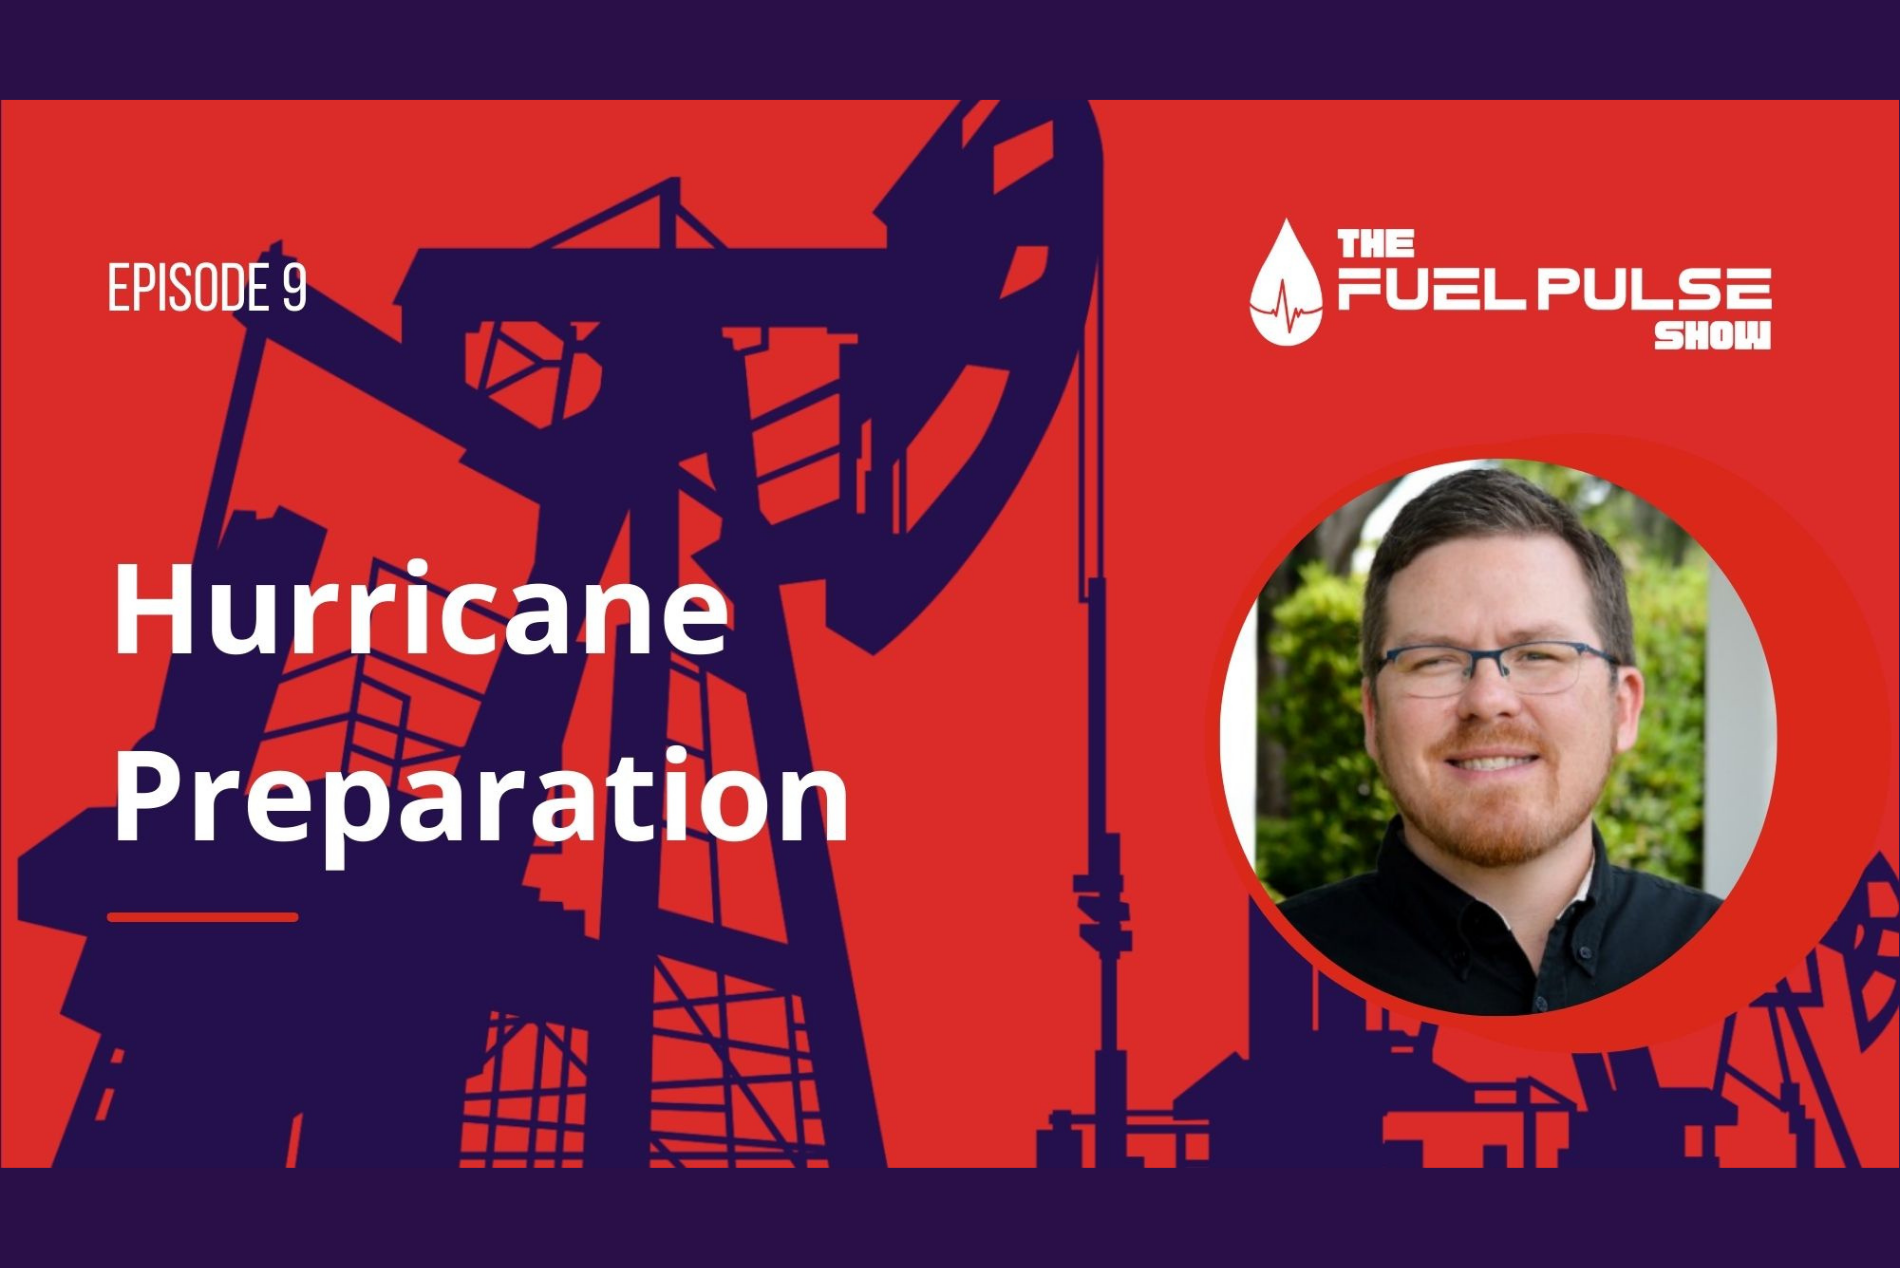 The Fuel Pulse Show Episode 009 - Hurricane Preparation